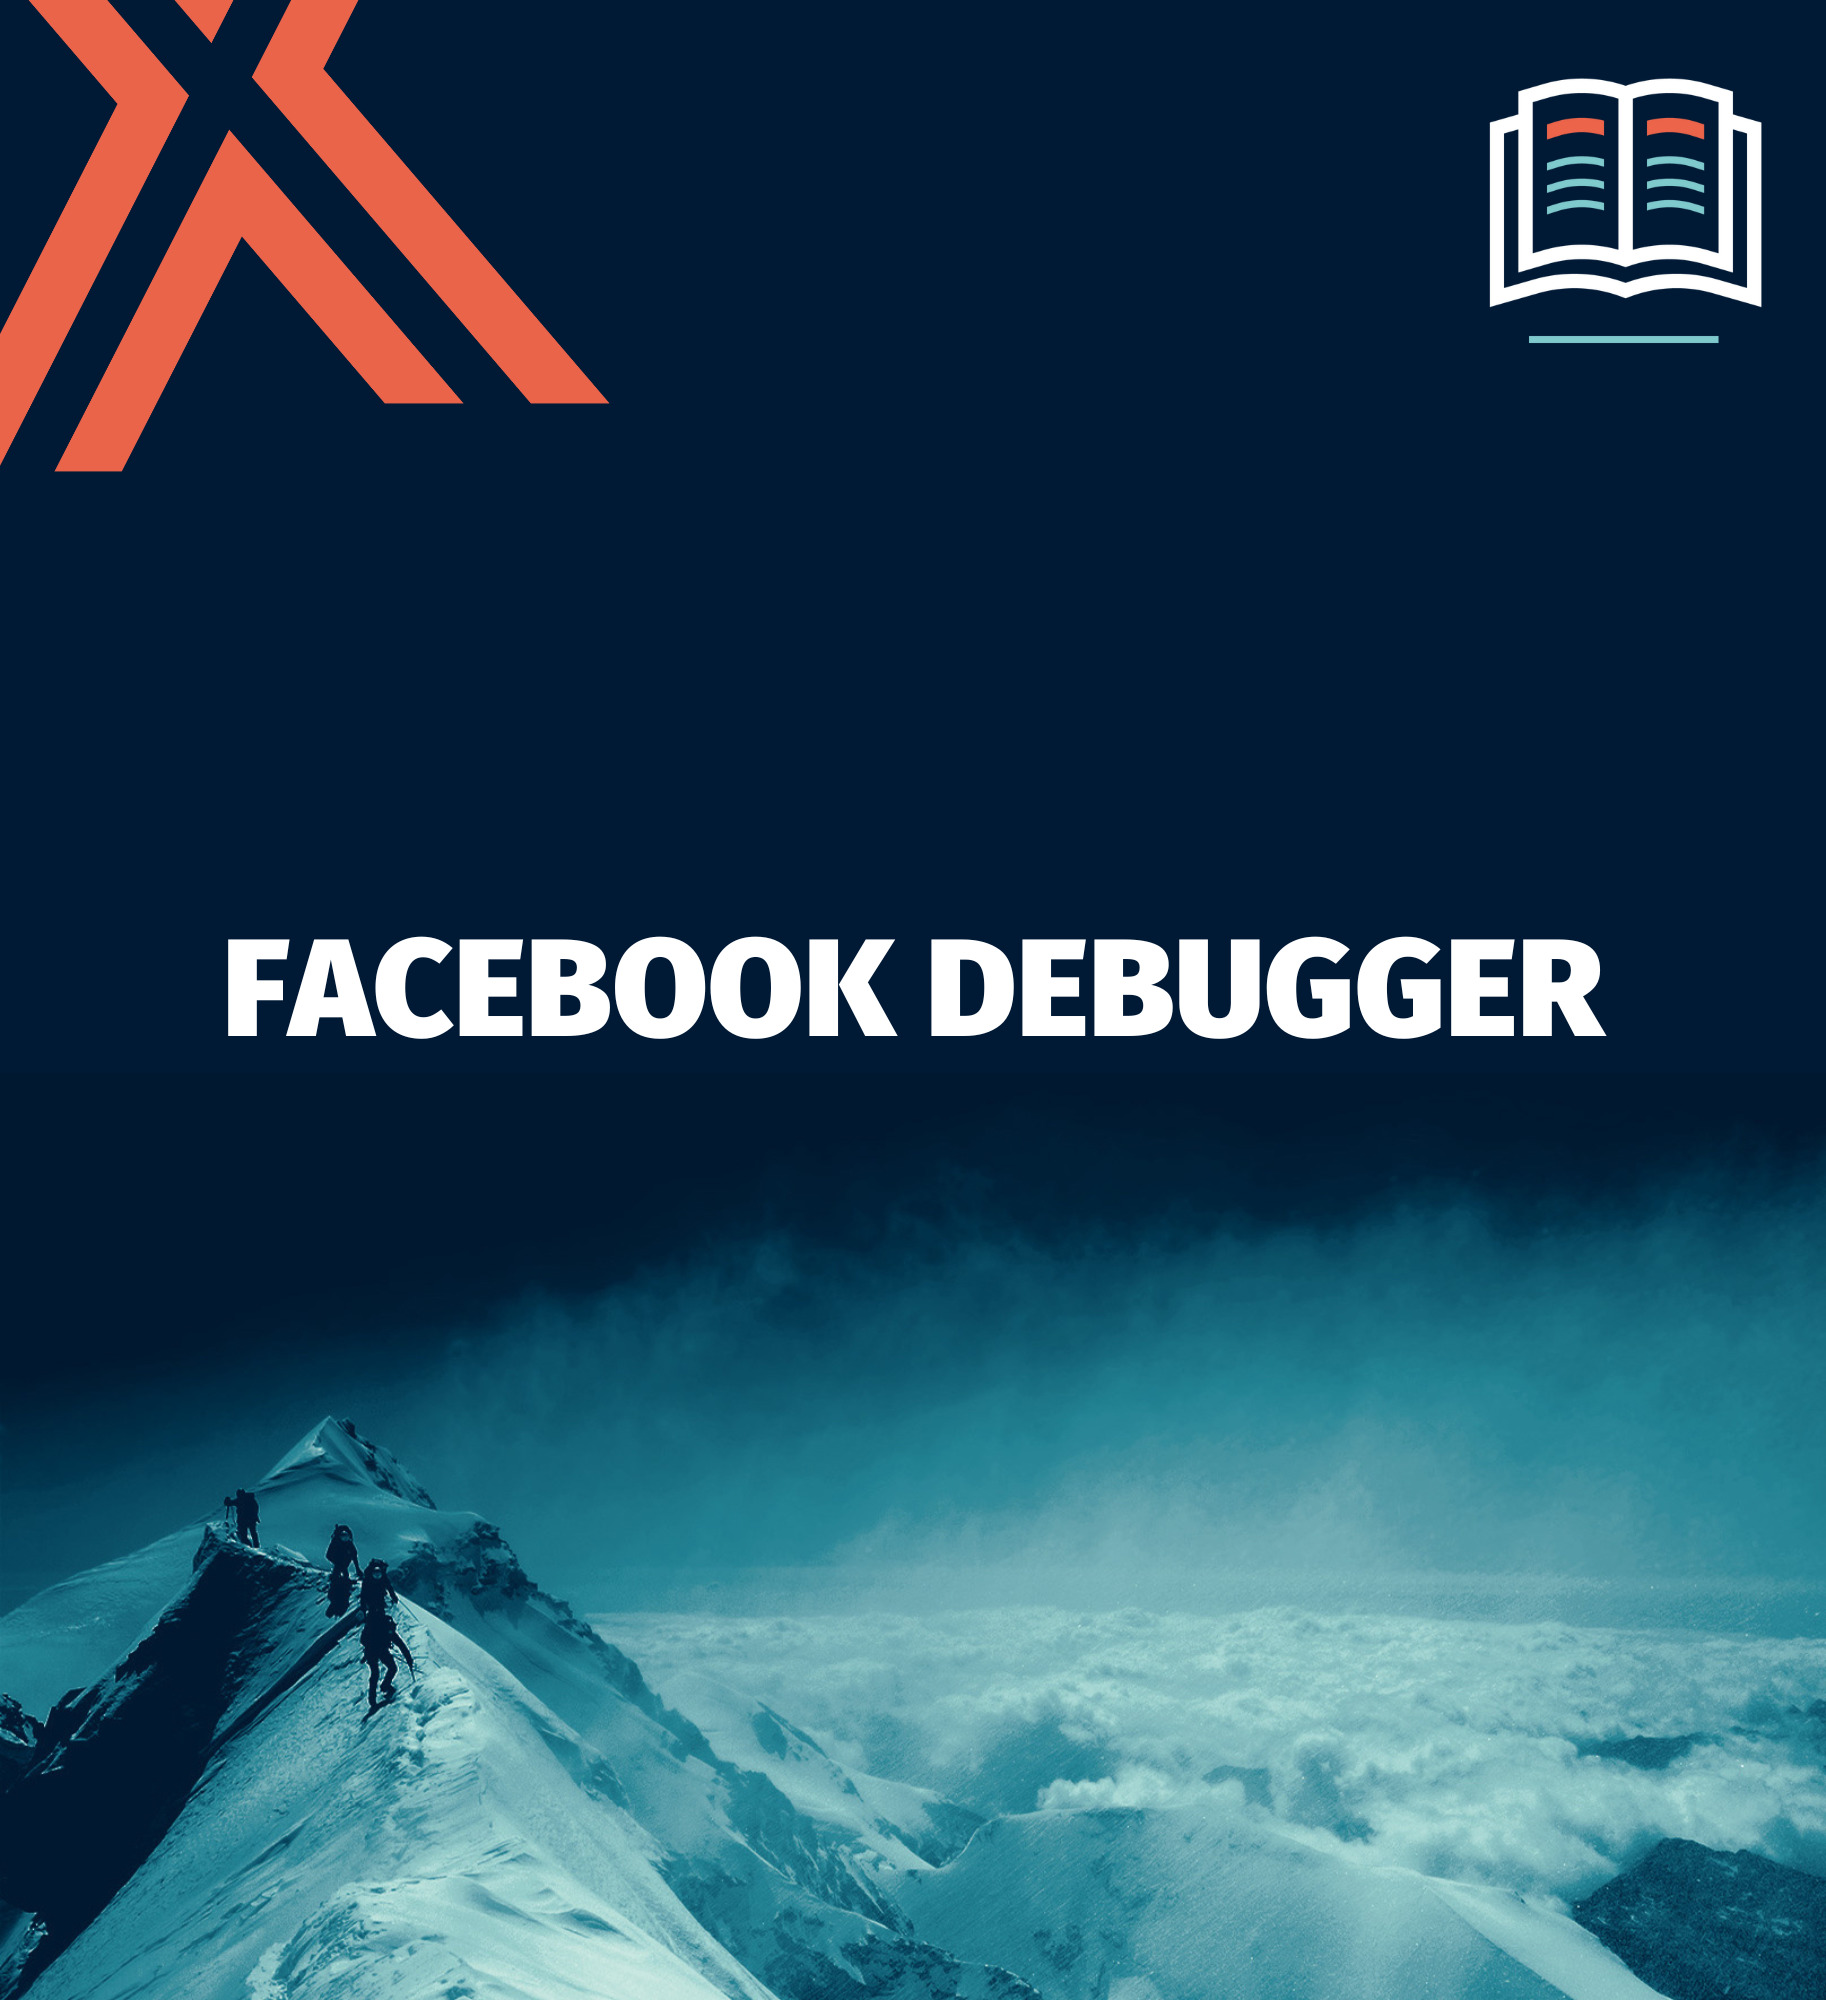 Facebook Debugger – Rebekka Riek